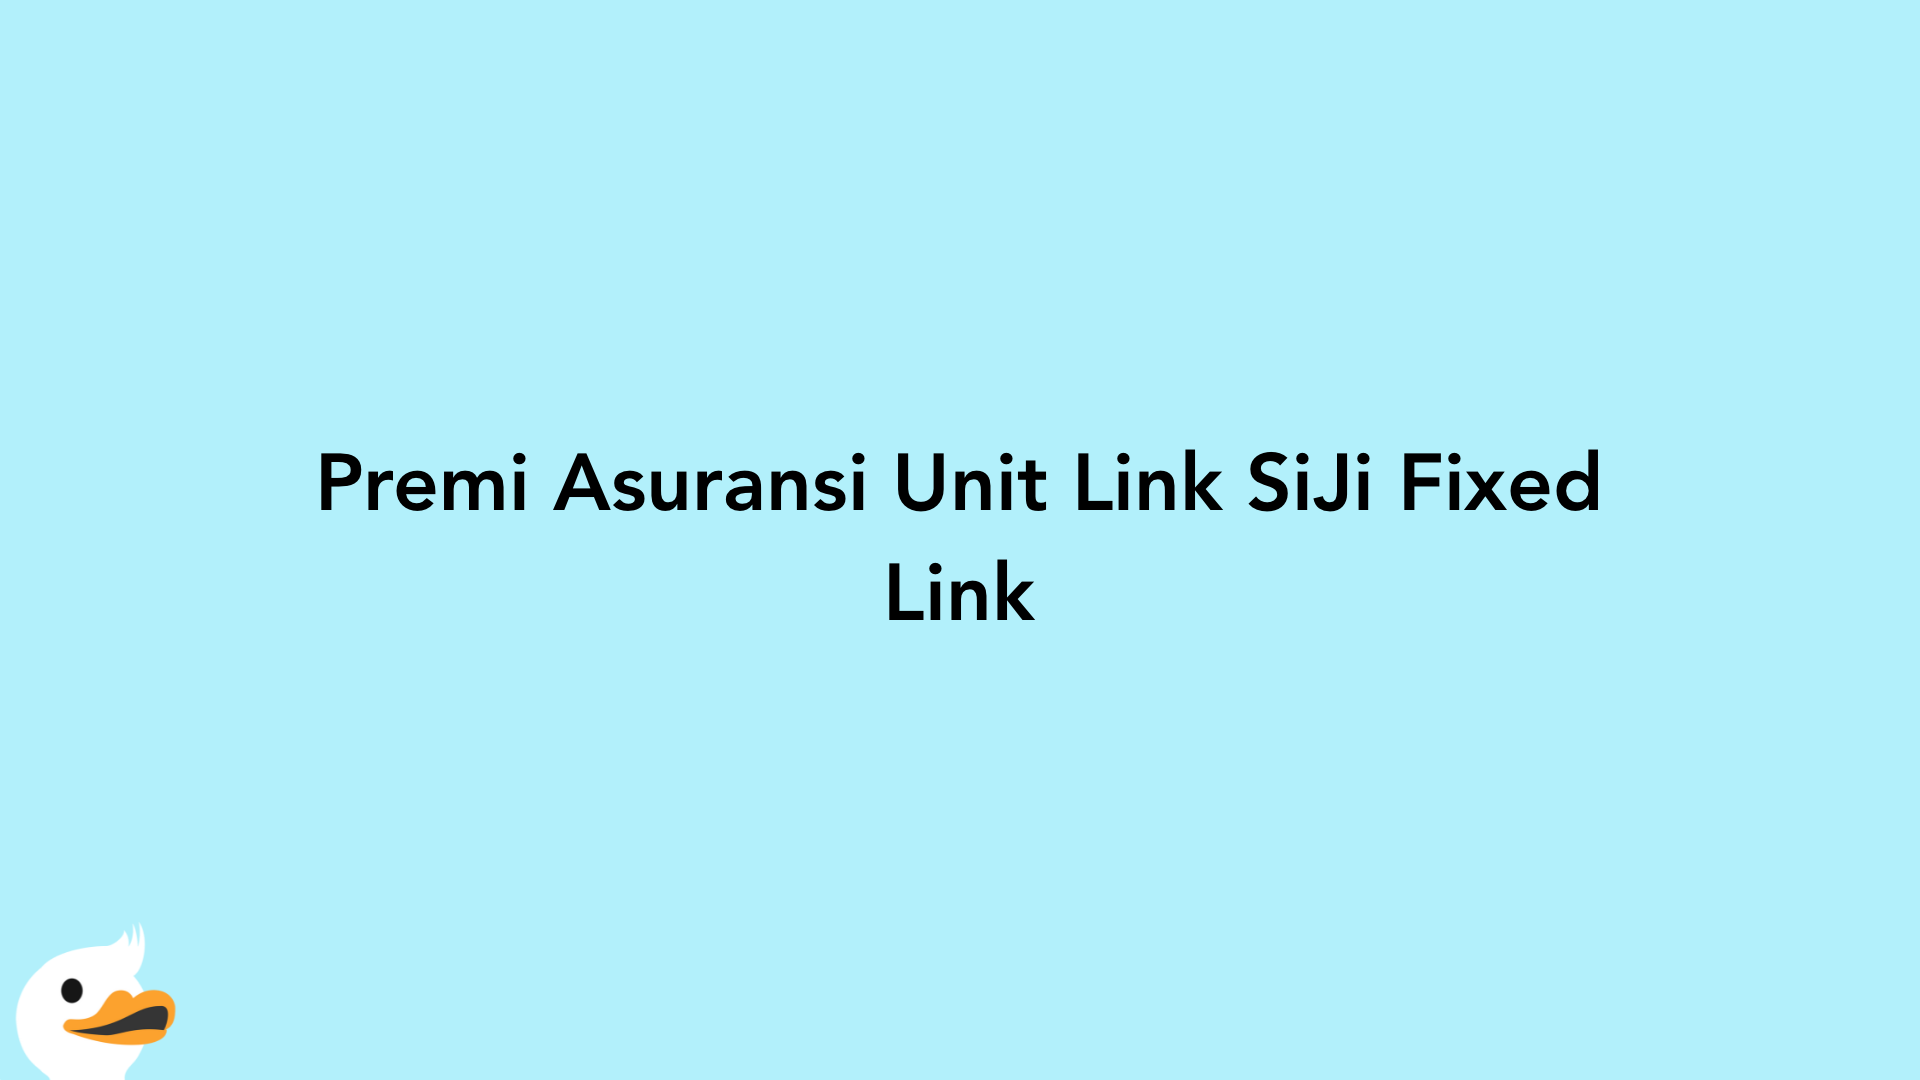 Premi Asuransi Unit Link SiJi Fixed Link